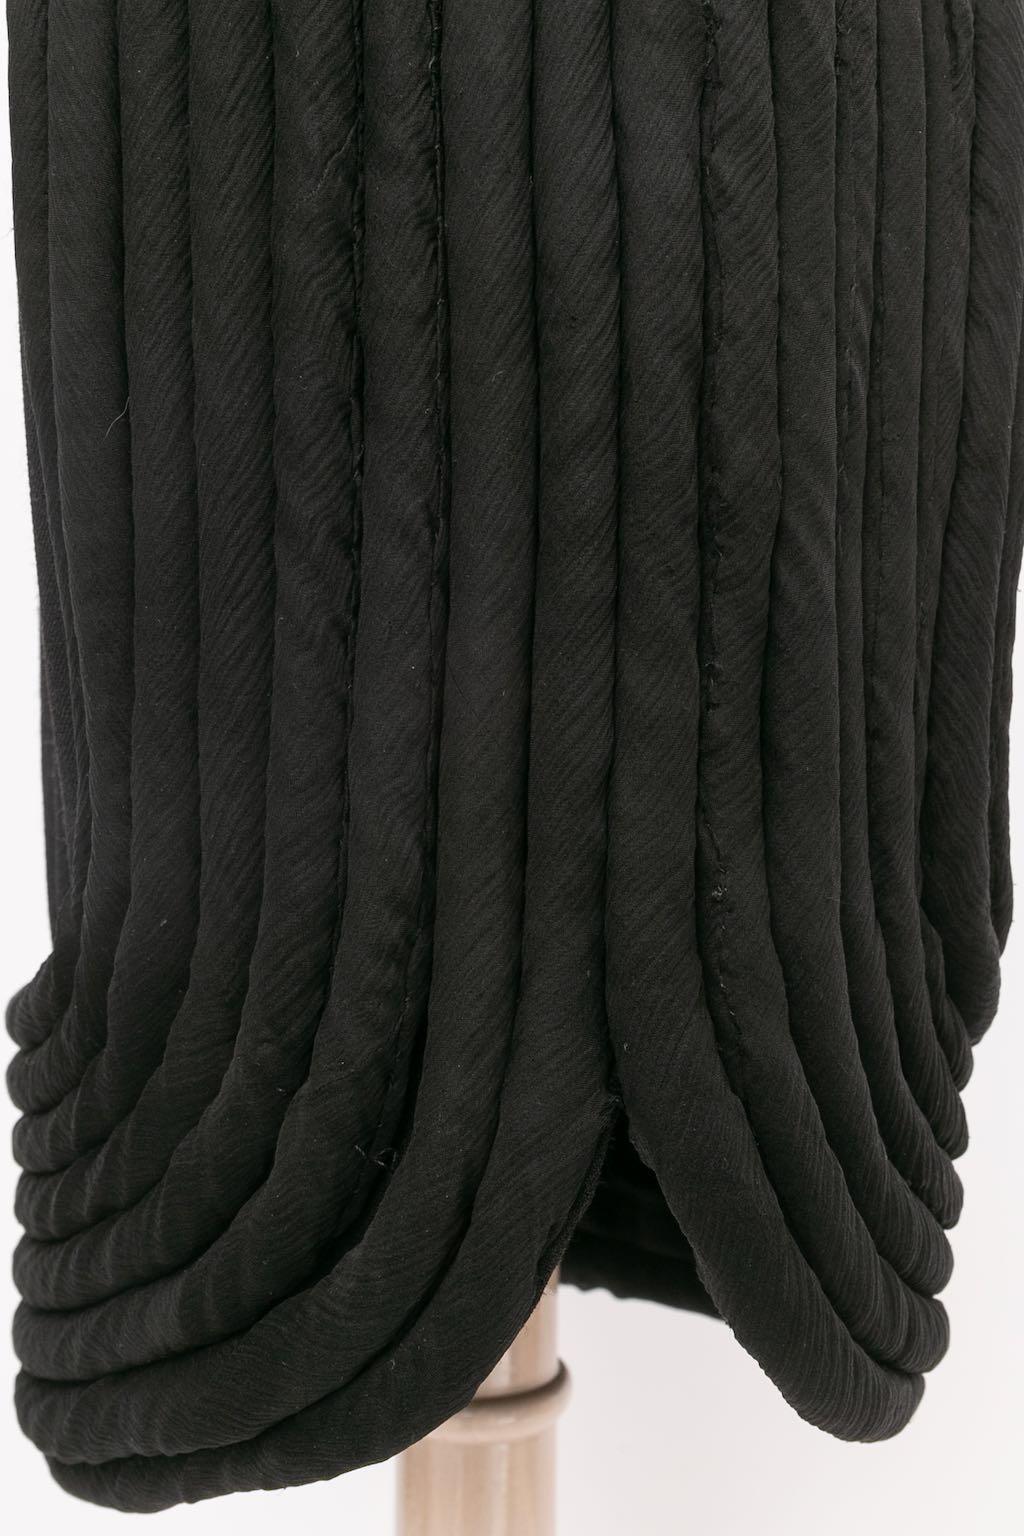 Balmain Wool and Silk Black Dress For Sale 2